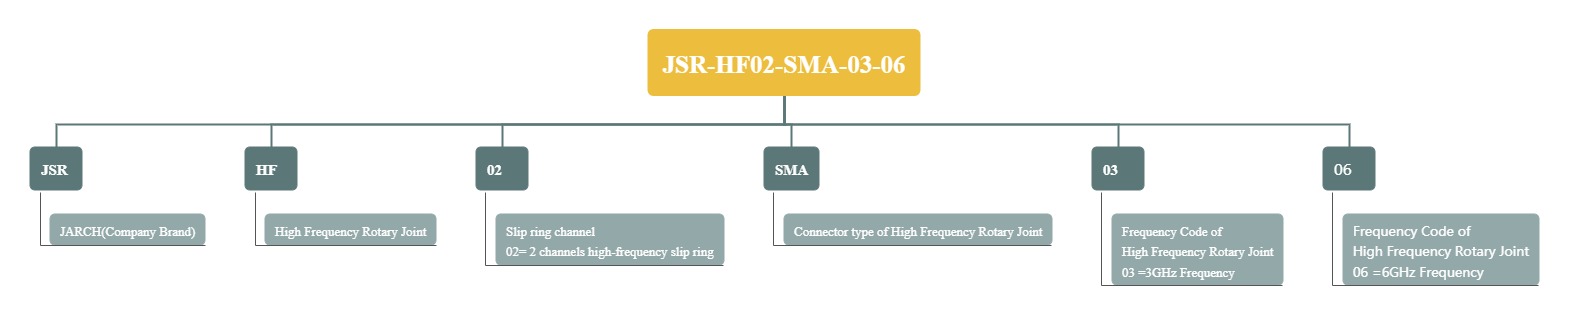 JSR-HF02-SMA-03-06.jpg